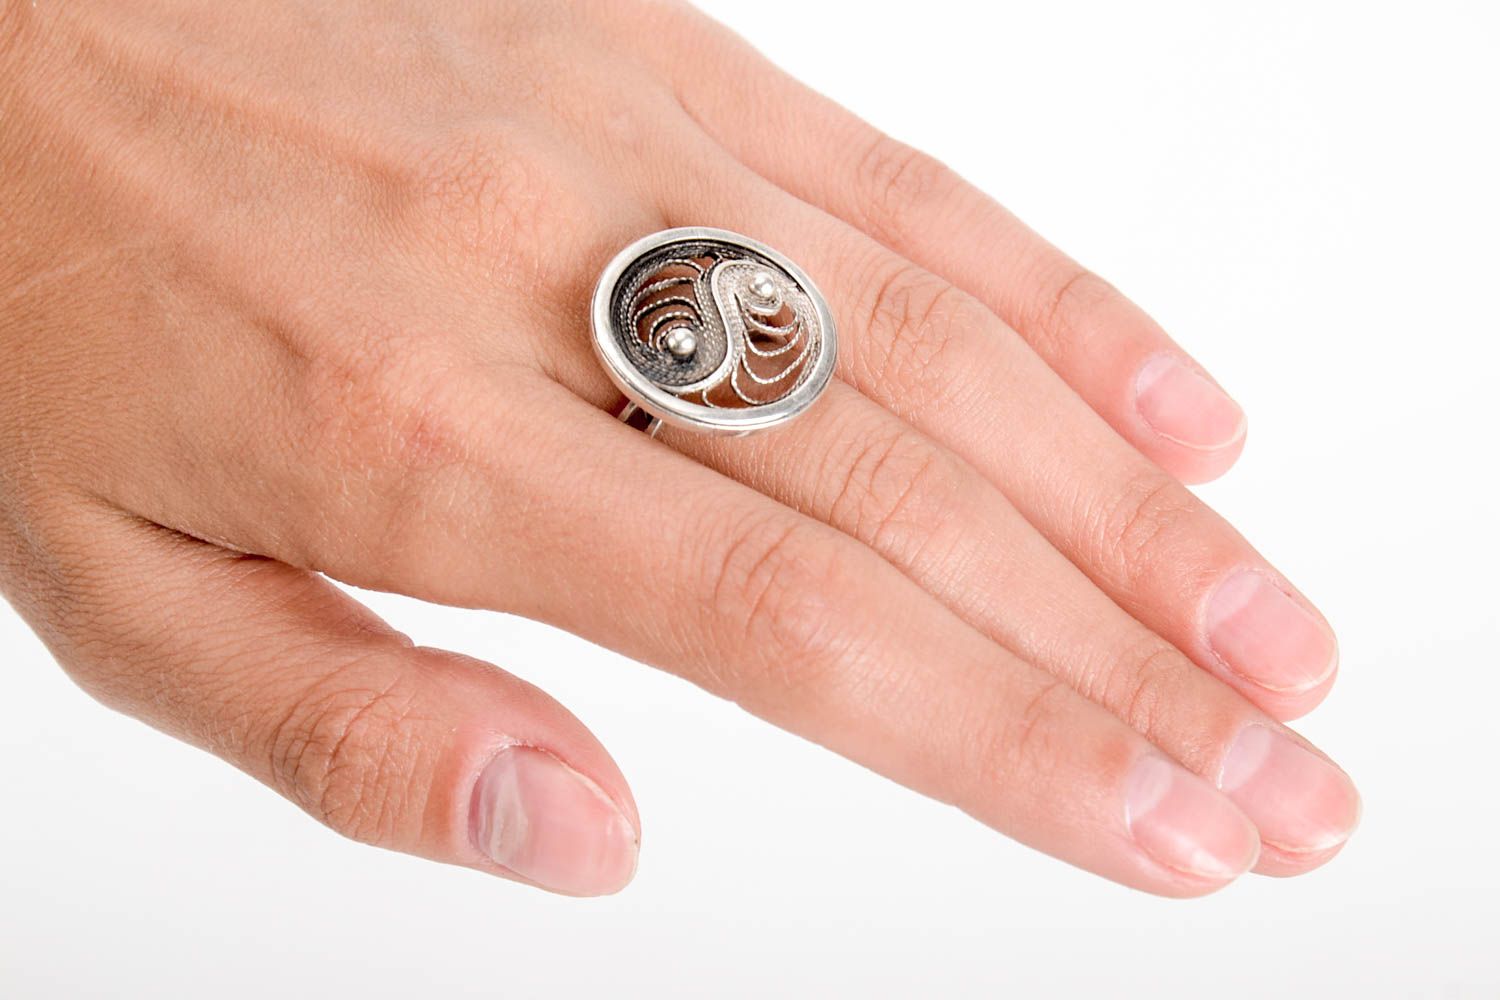 Stylish handmade silver ring designs beautiful jewellery fashion trends photo 1